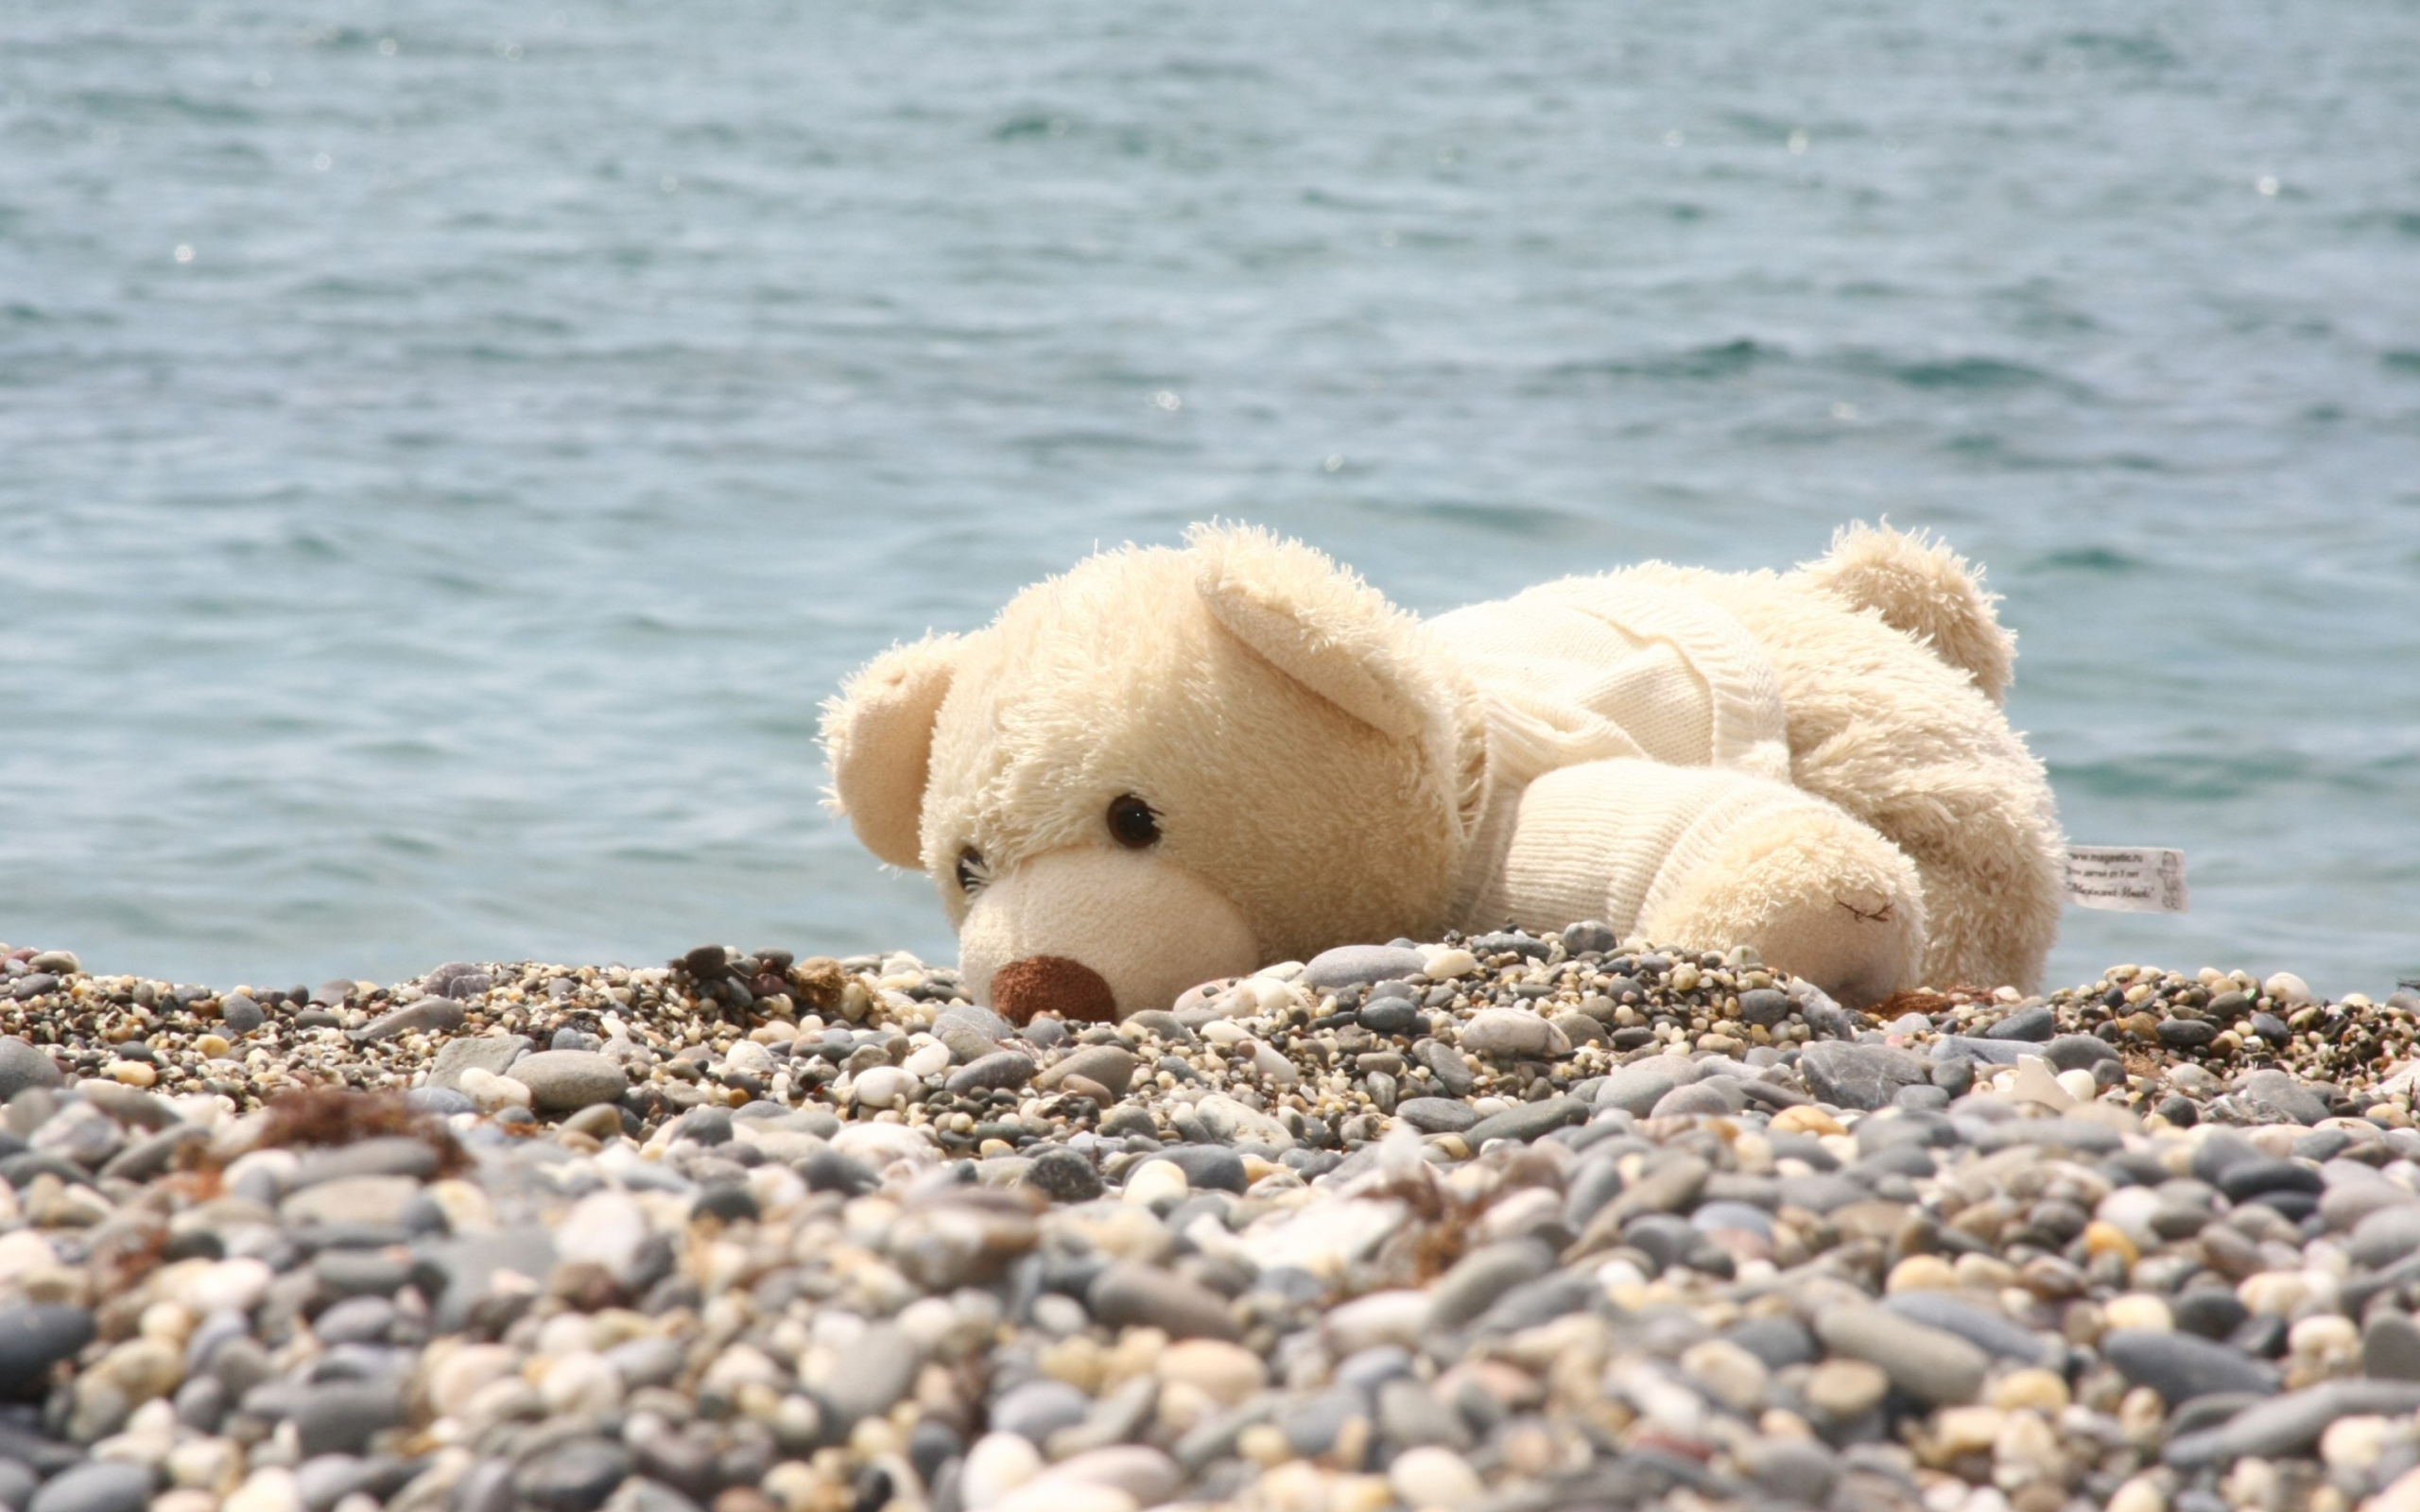 White Teddy Forgotten On Beach wallpaper 2560x1600